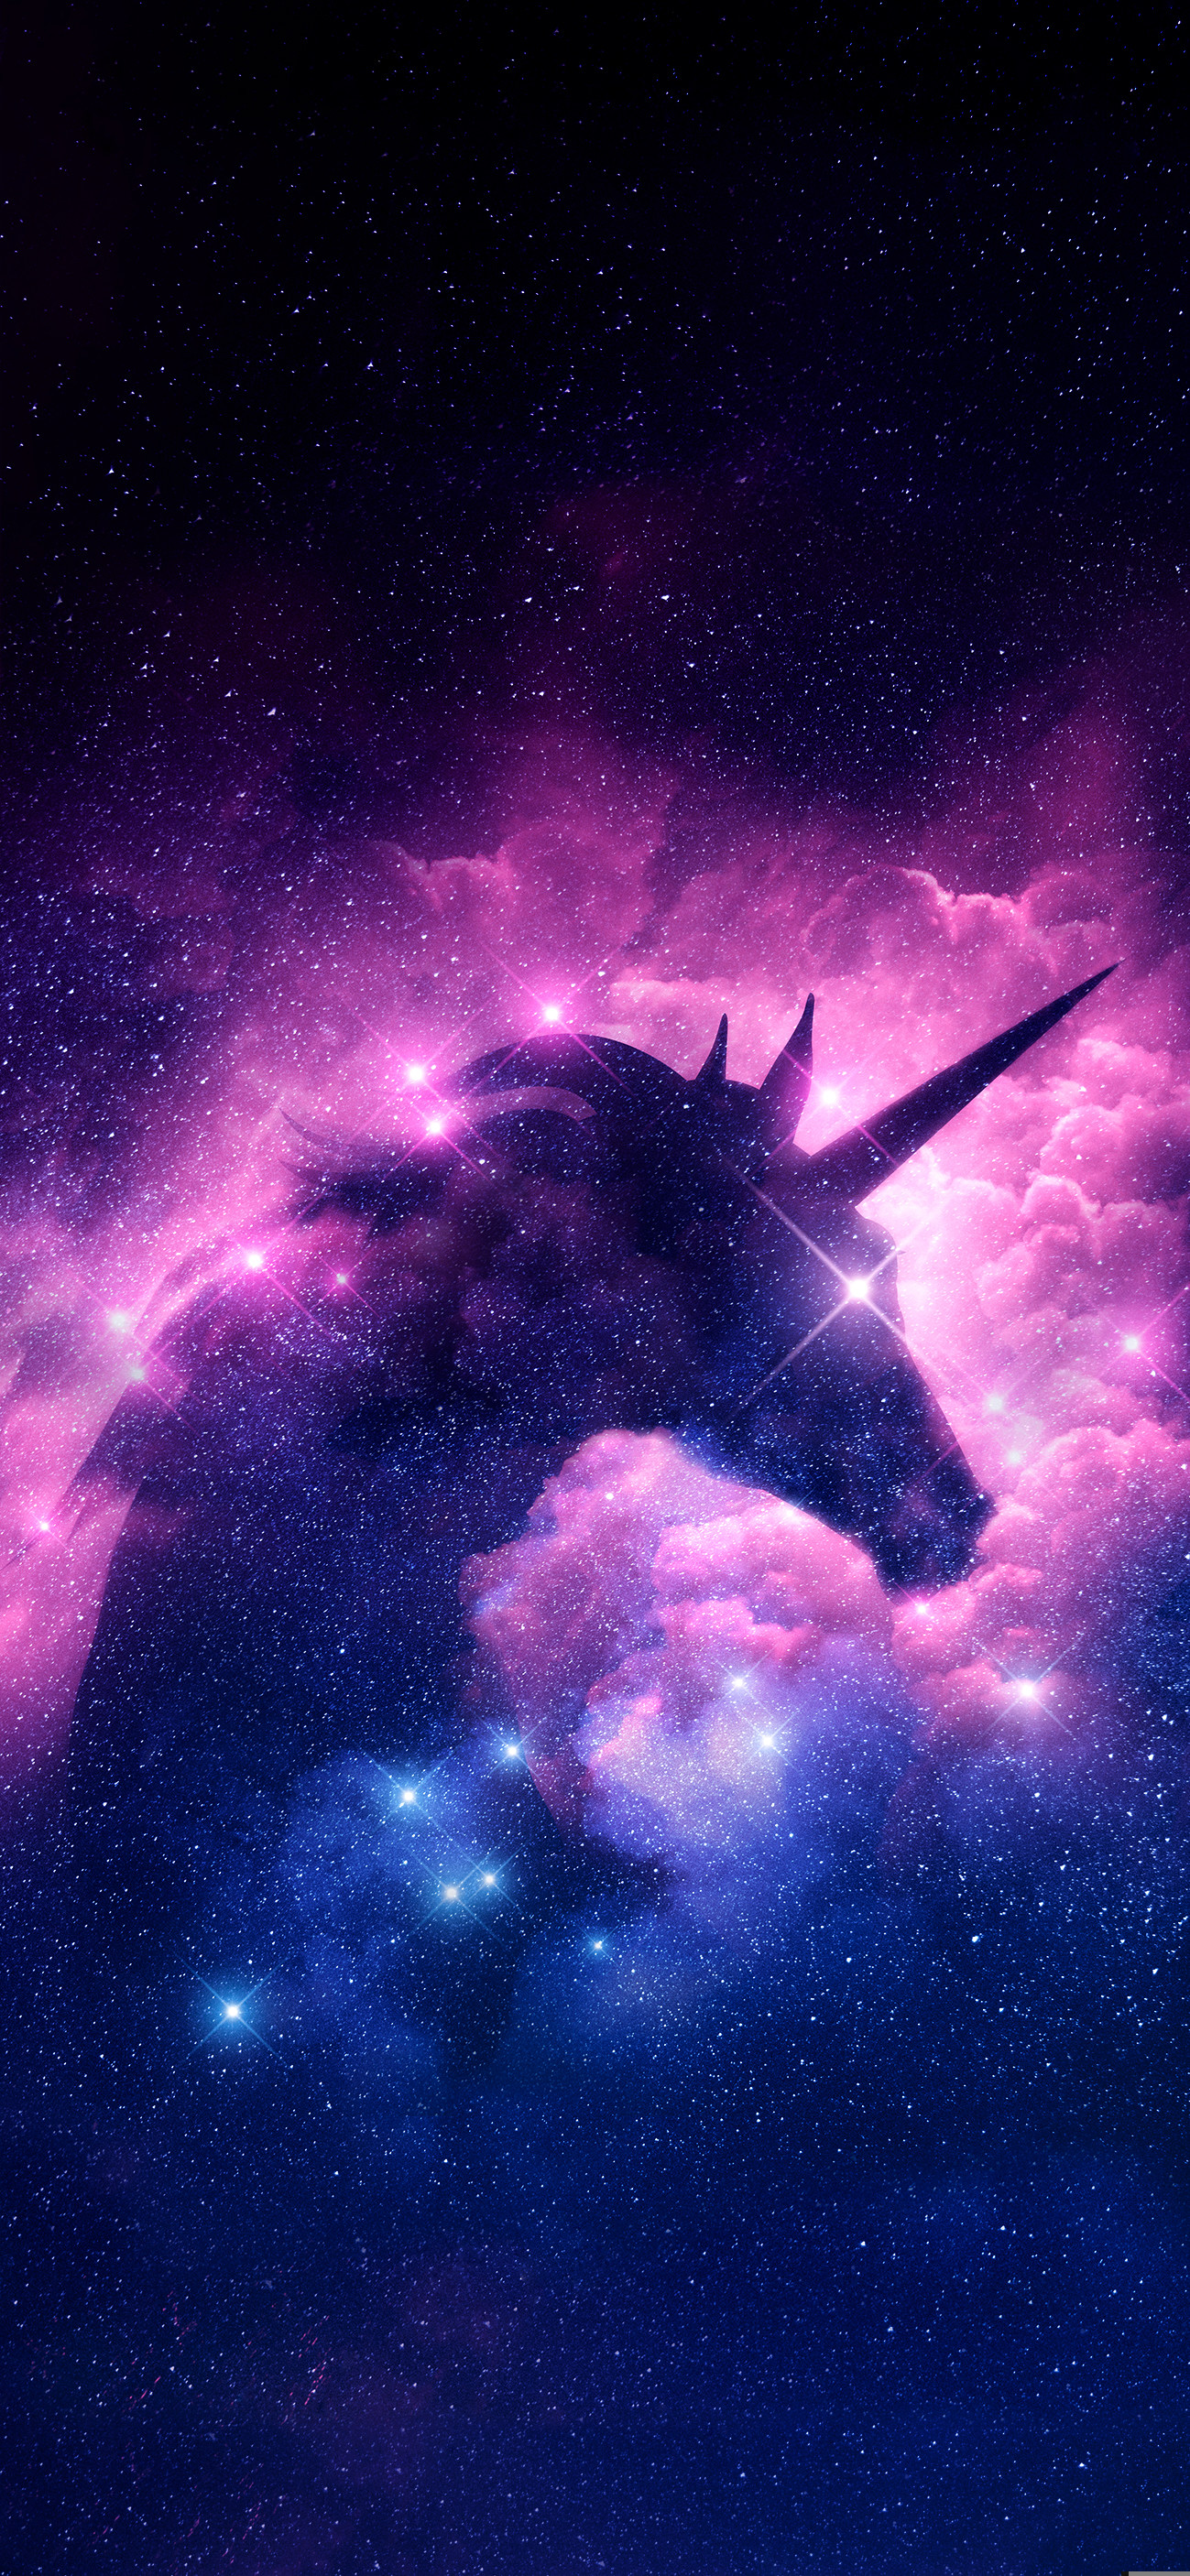 1299x2813 Unicorn galaxy iPhone wallpaper